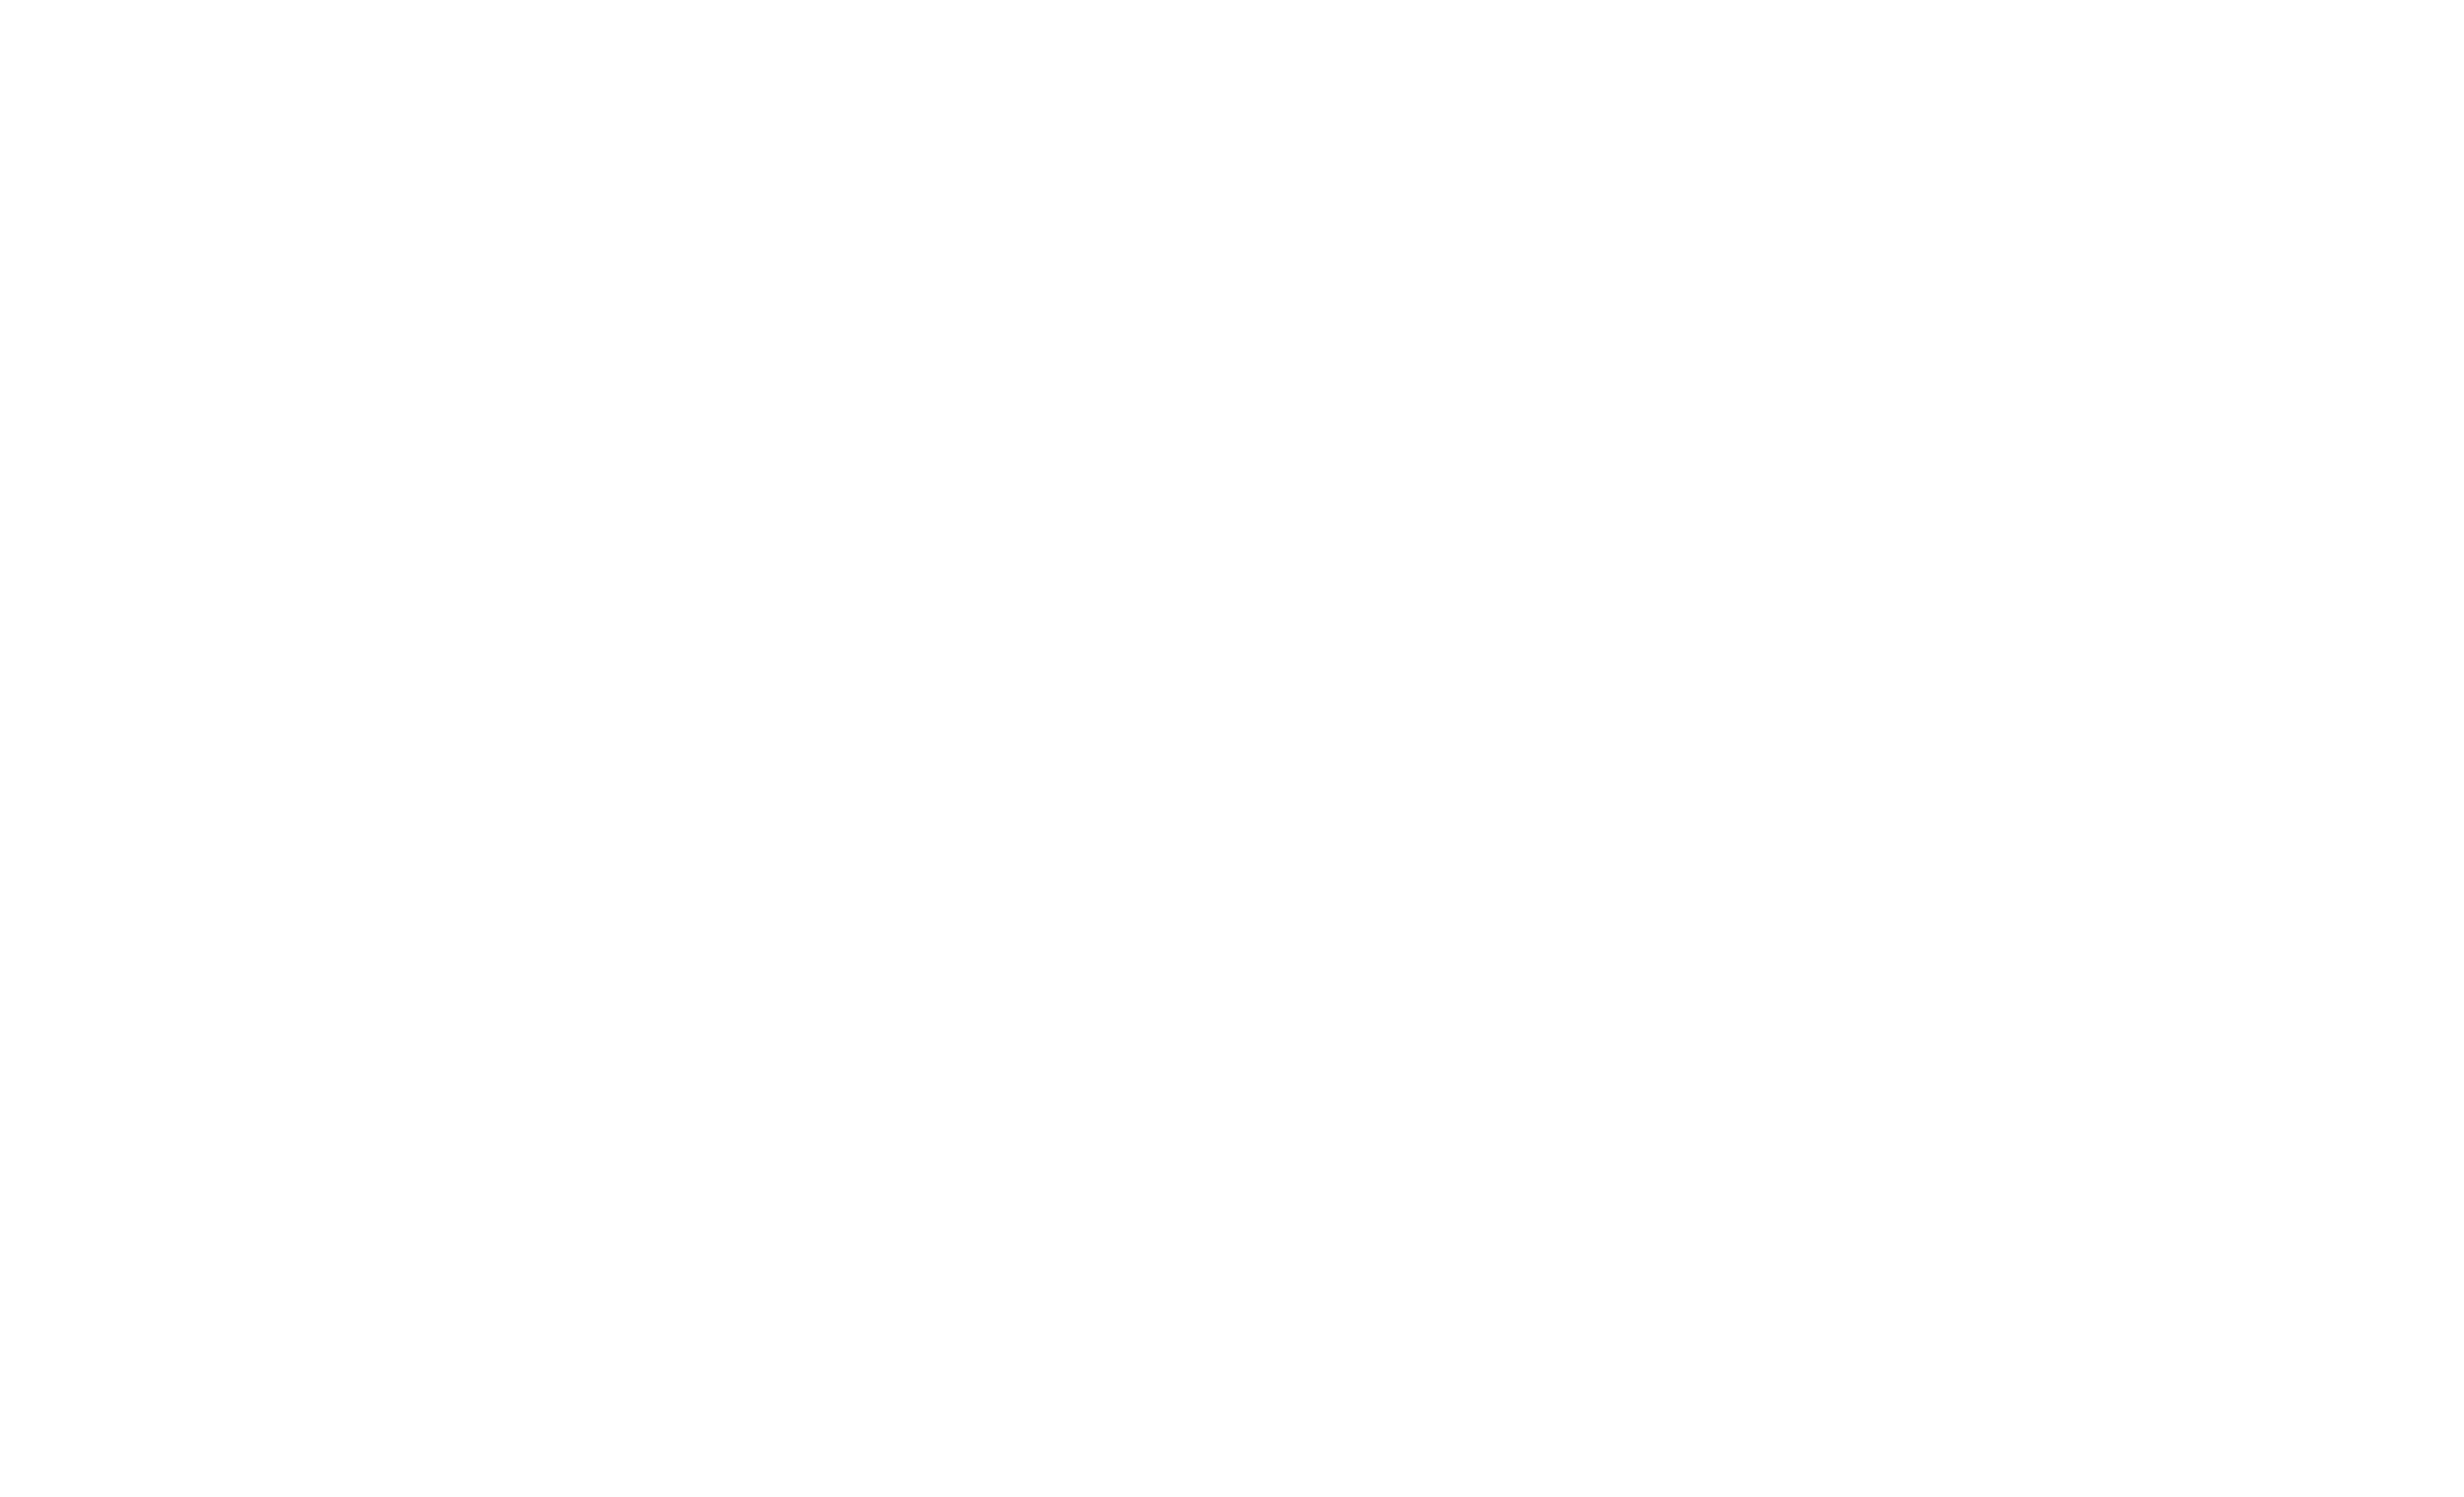 Maritime and Coastguard Agency logo, white